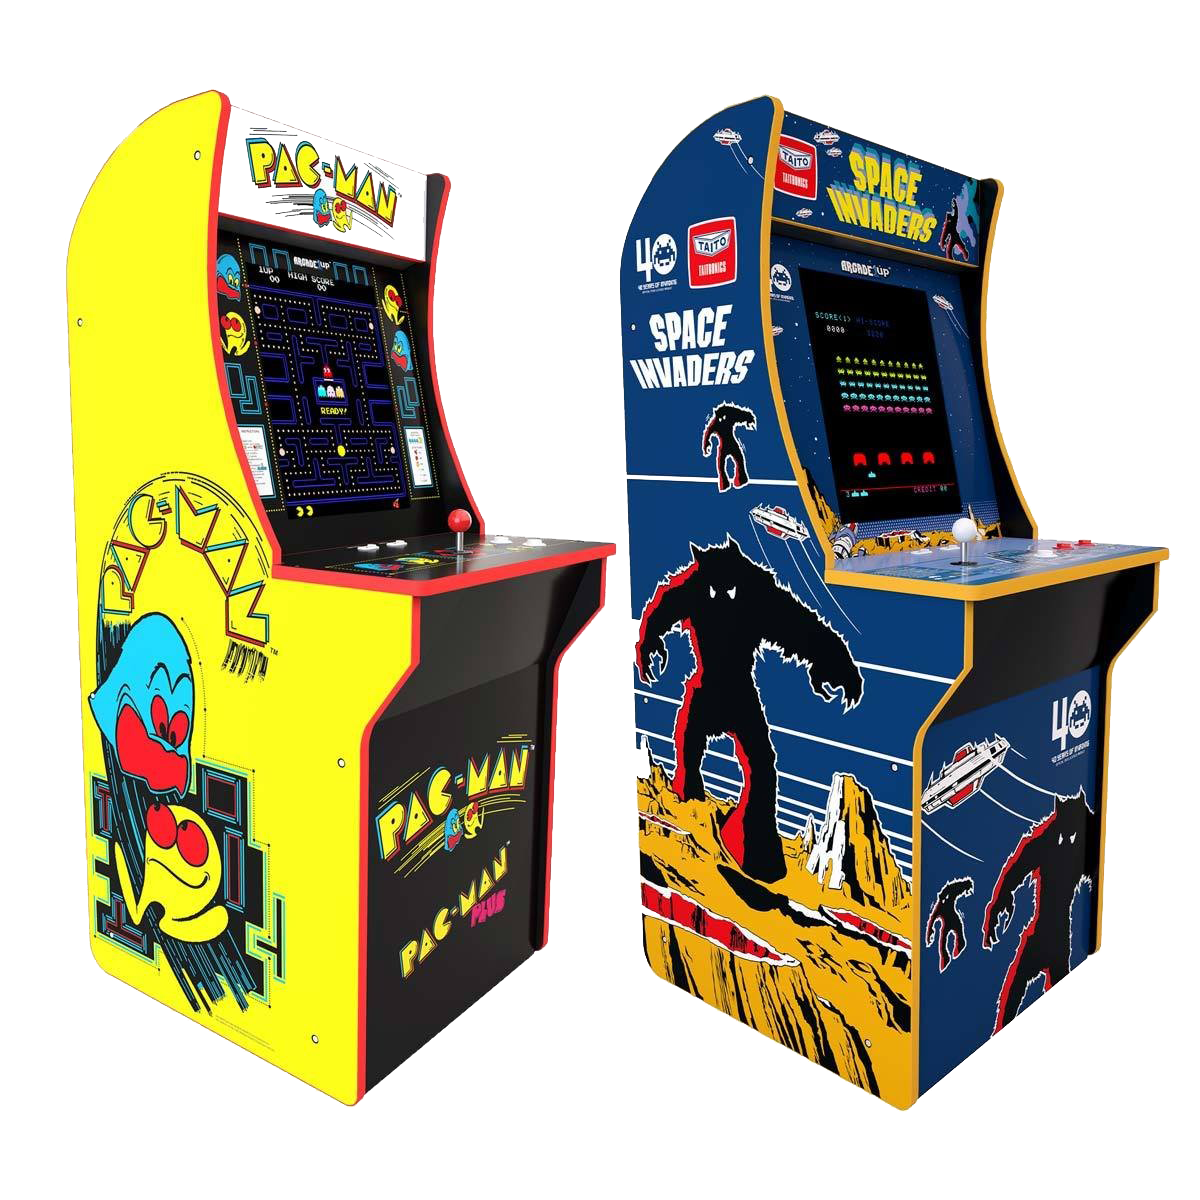 Retro-Arcade-Maschine PNG-Datei